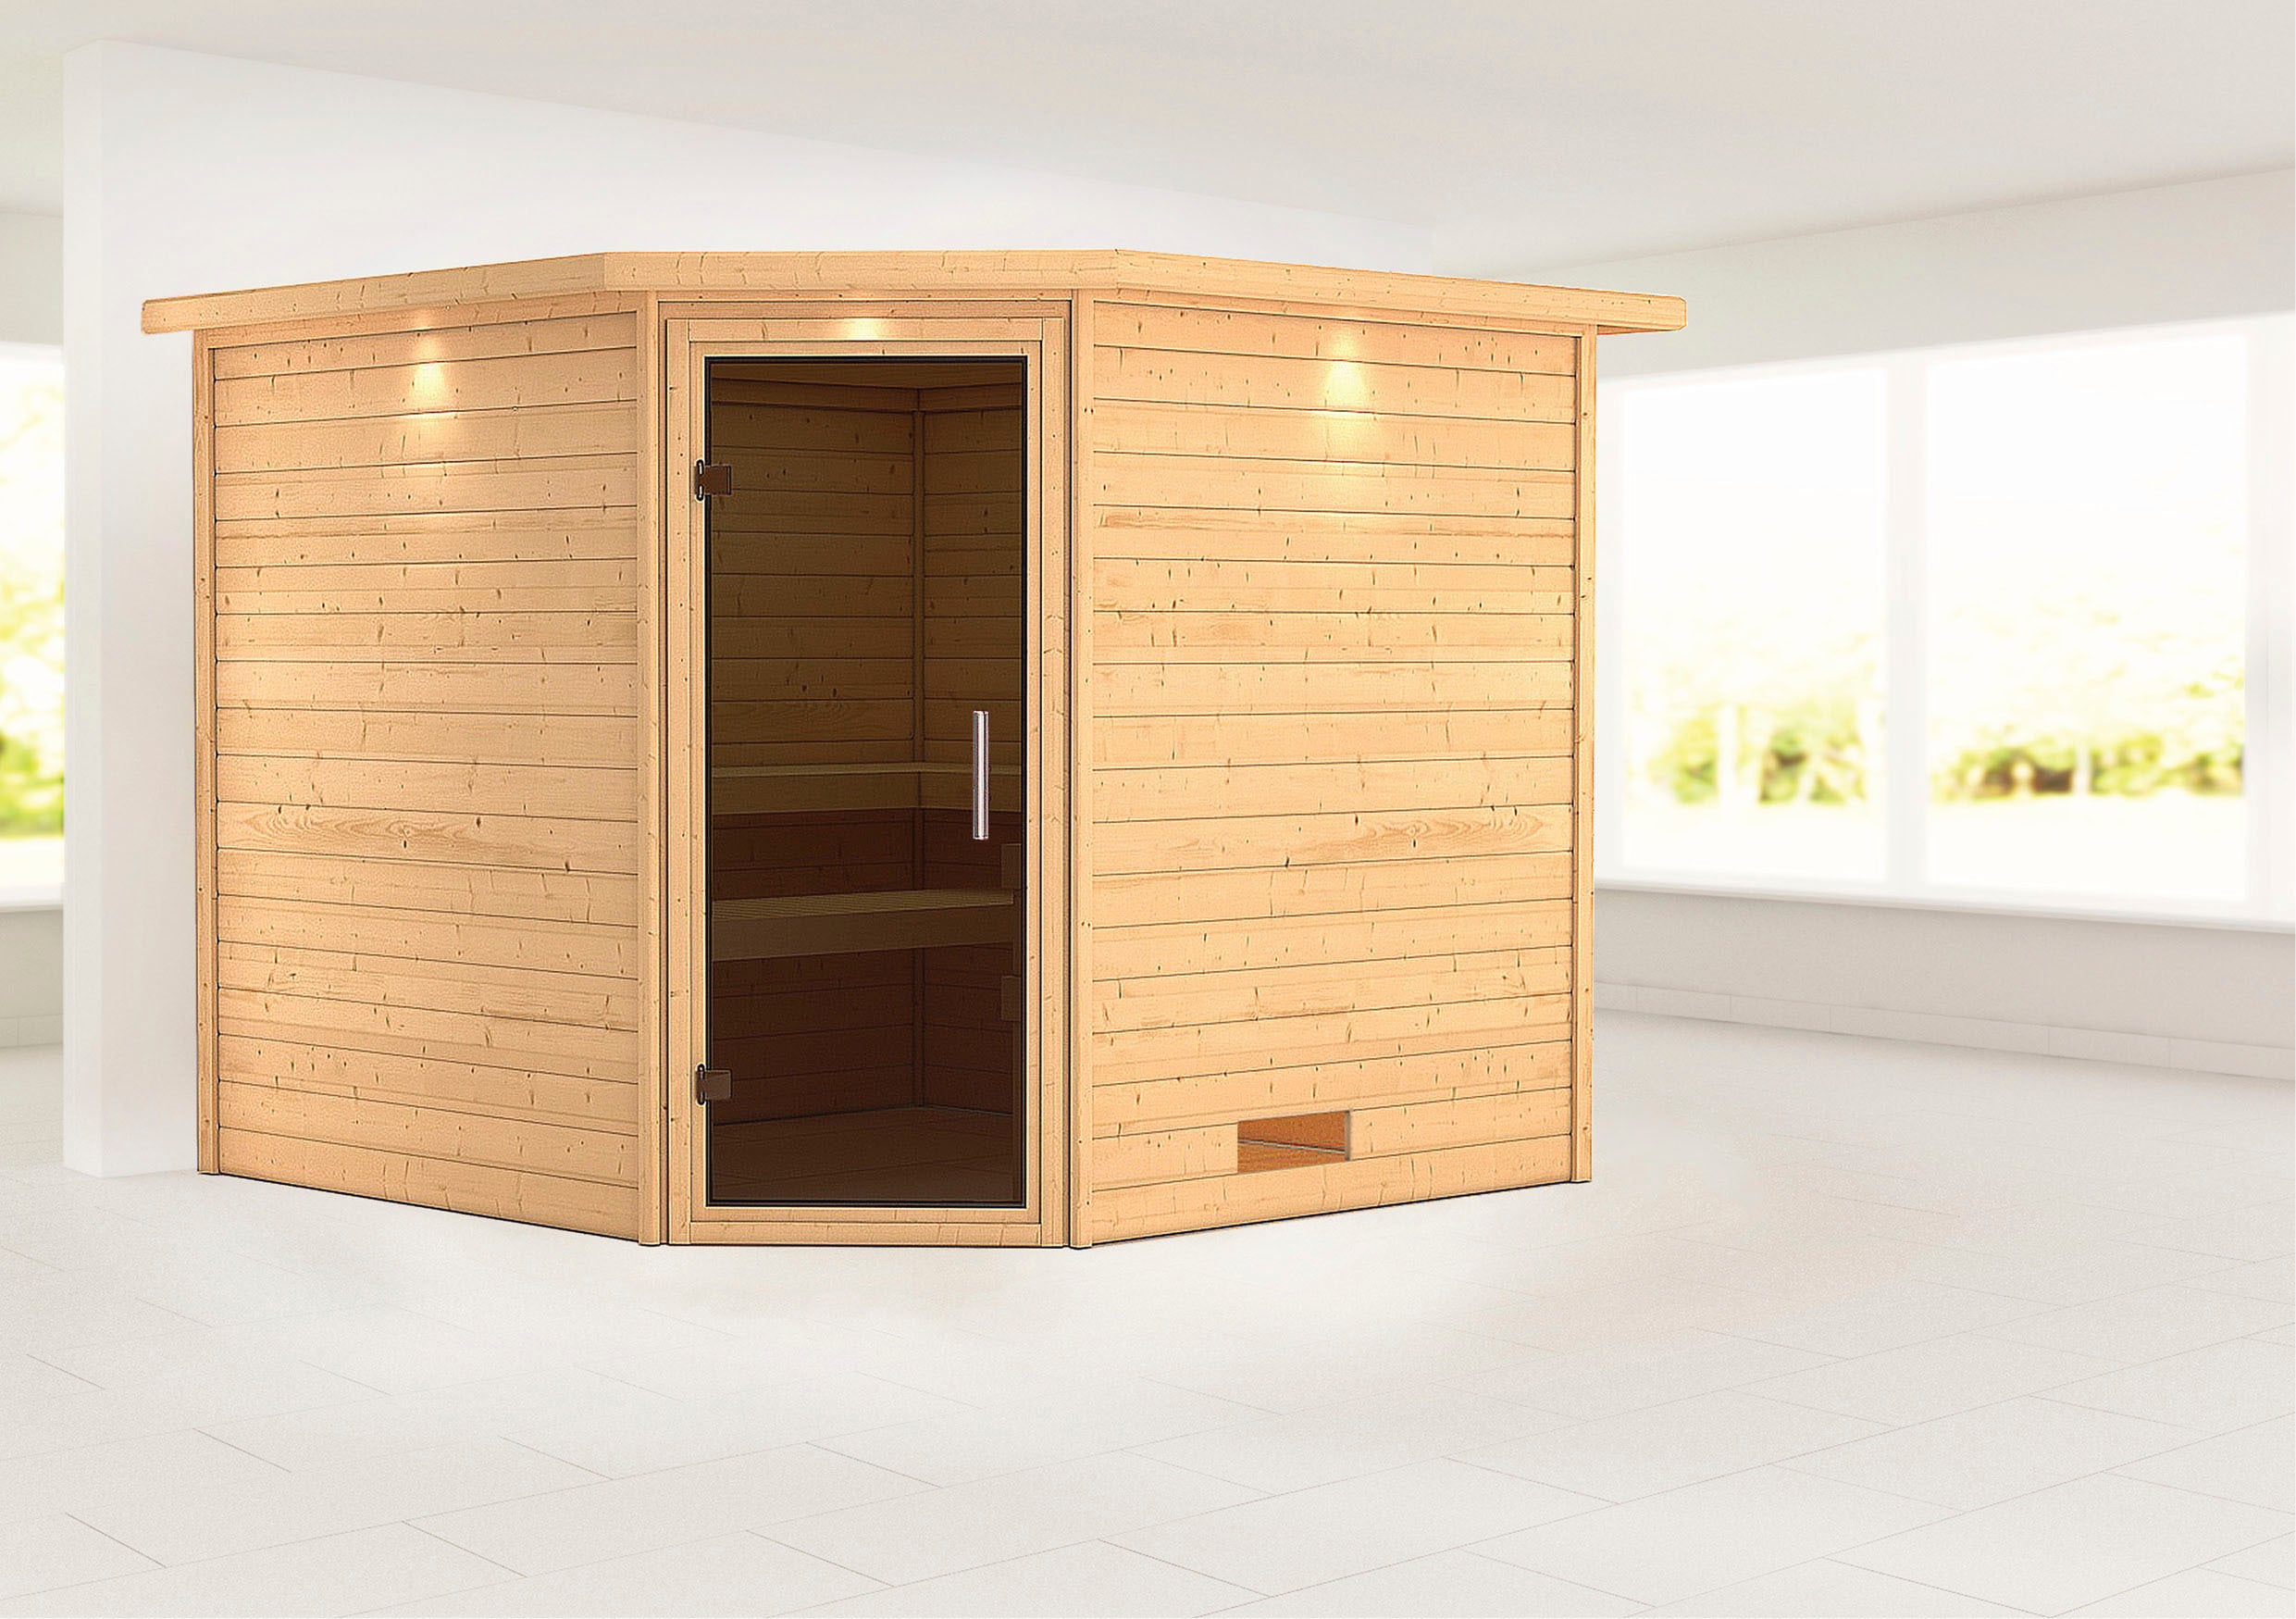 Karibu Sauna ""Leona" mit Kranz und graphitfarbener Tür naturbelassen"